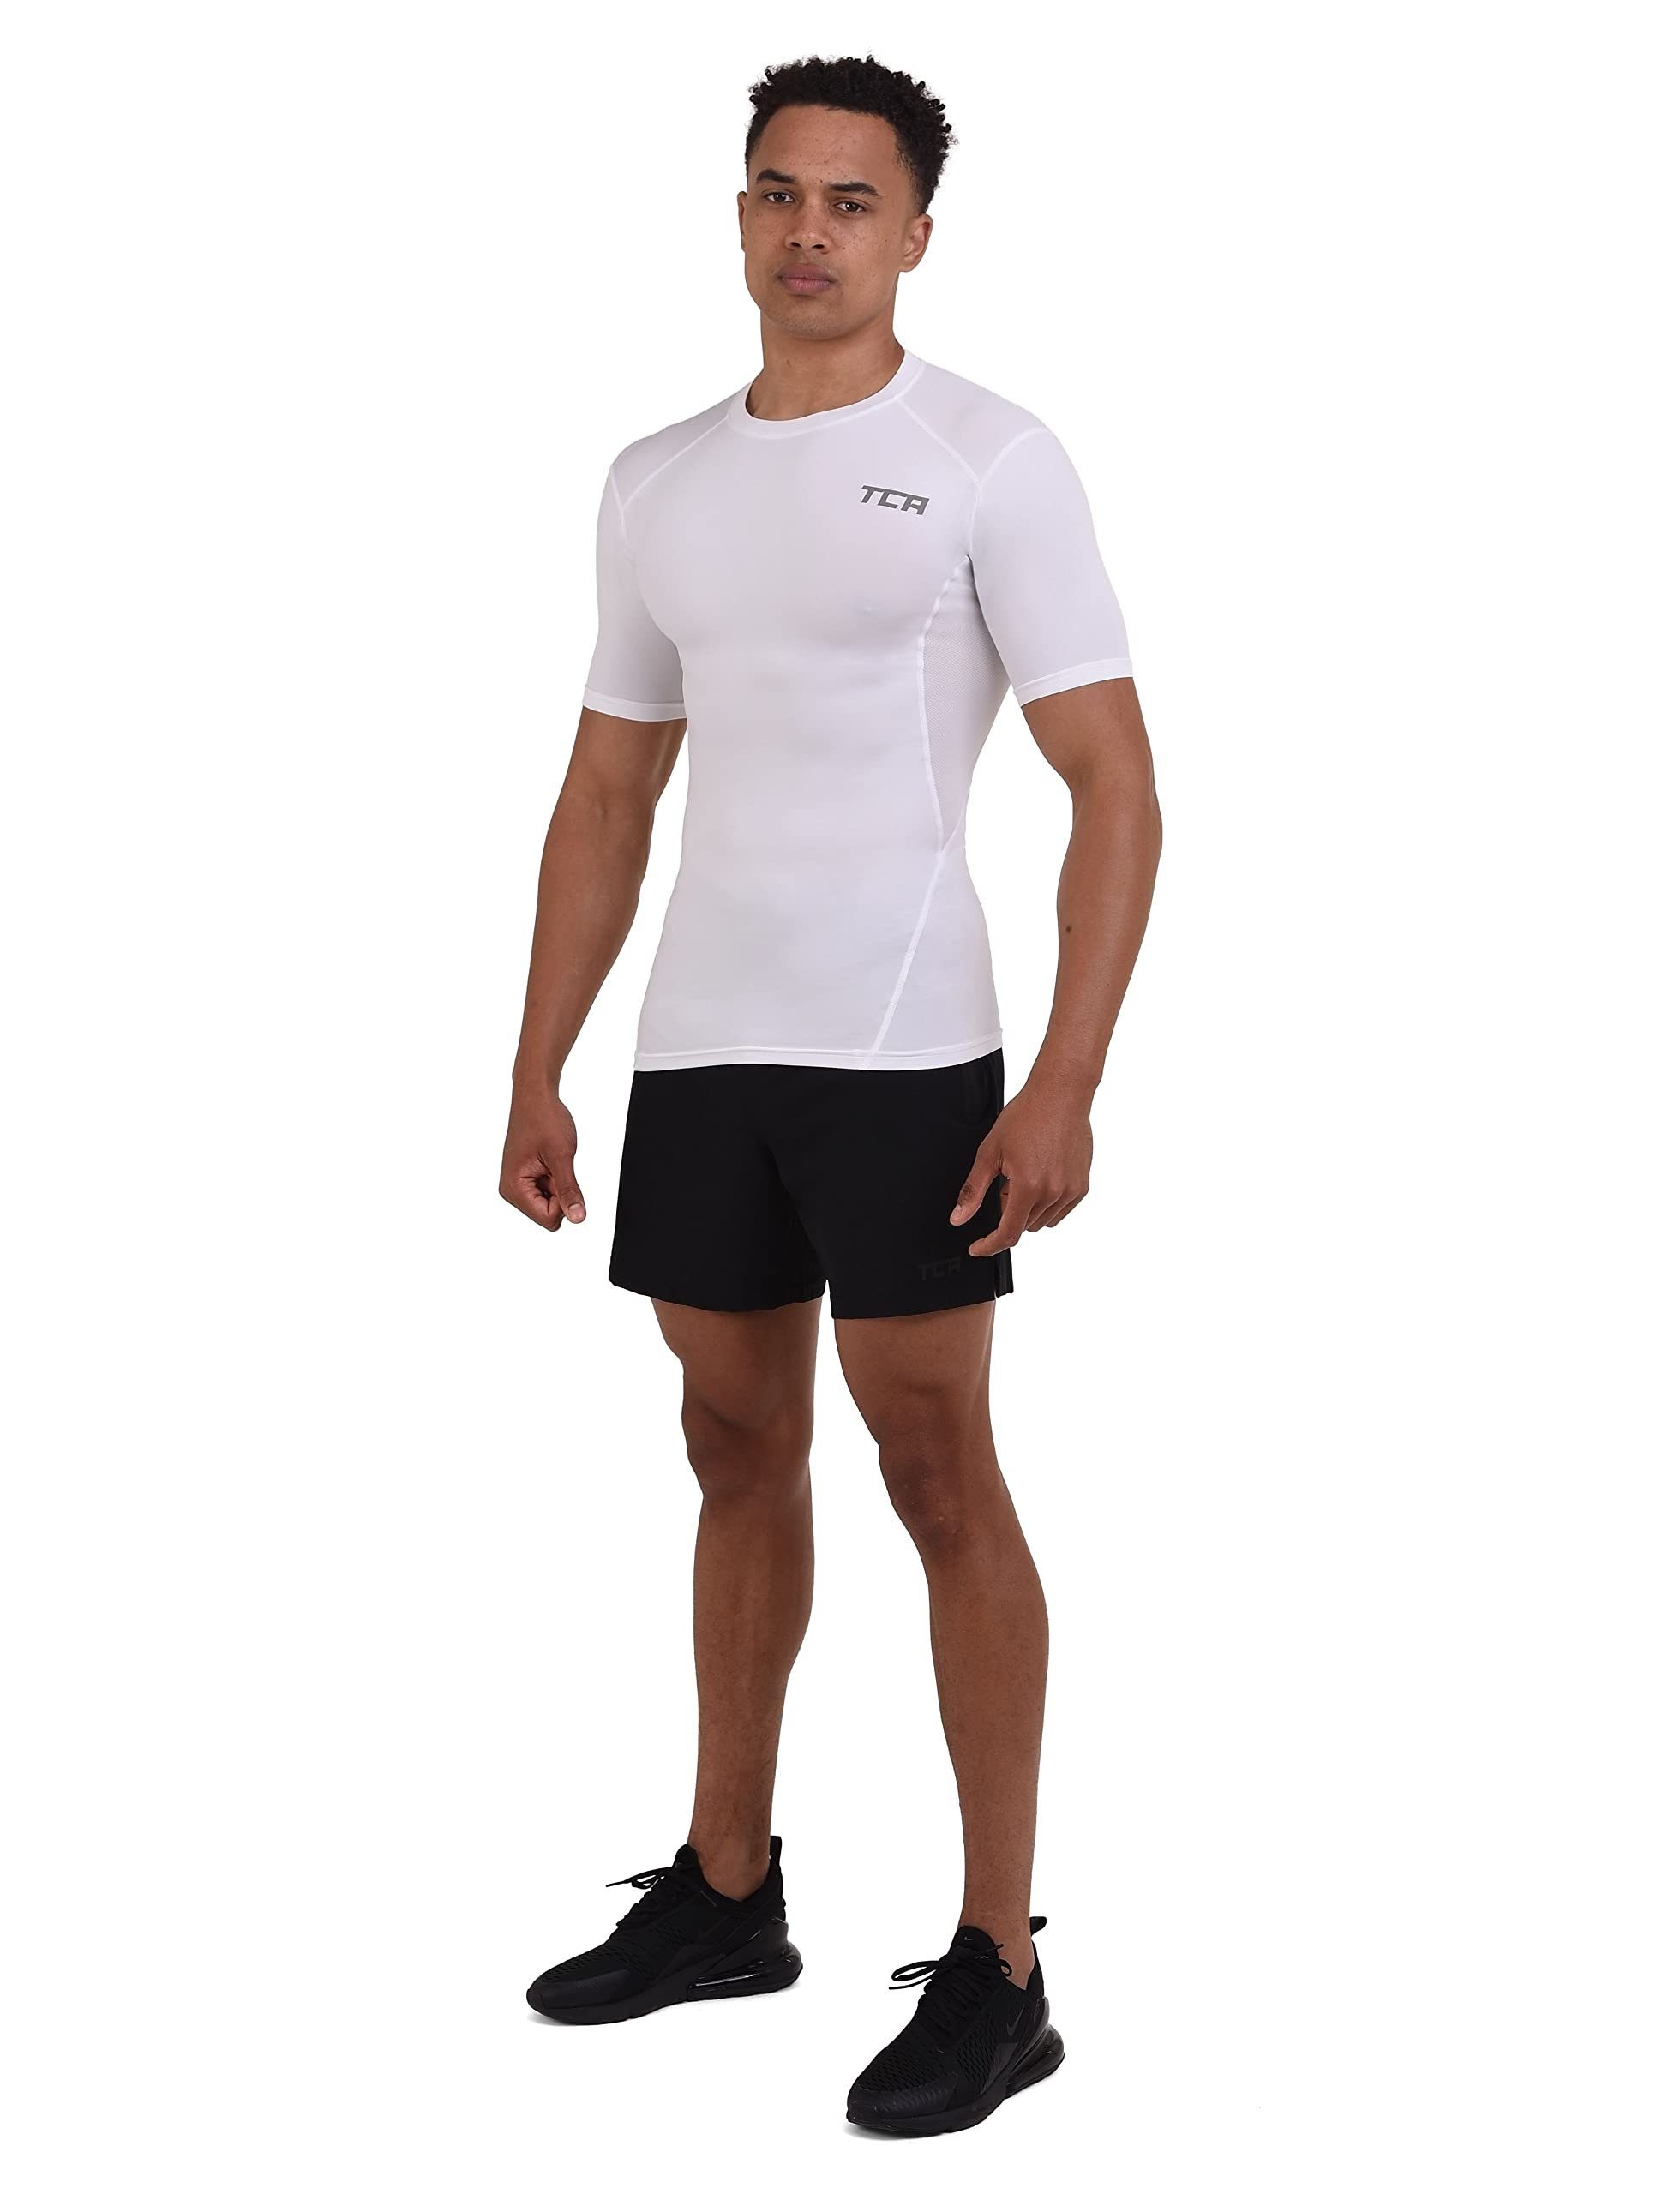 TCA - Sportshirt, TCA Funktionsunterhemd Weiss HyperFusion kurzärmlig, elastisch Herren